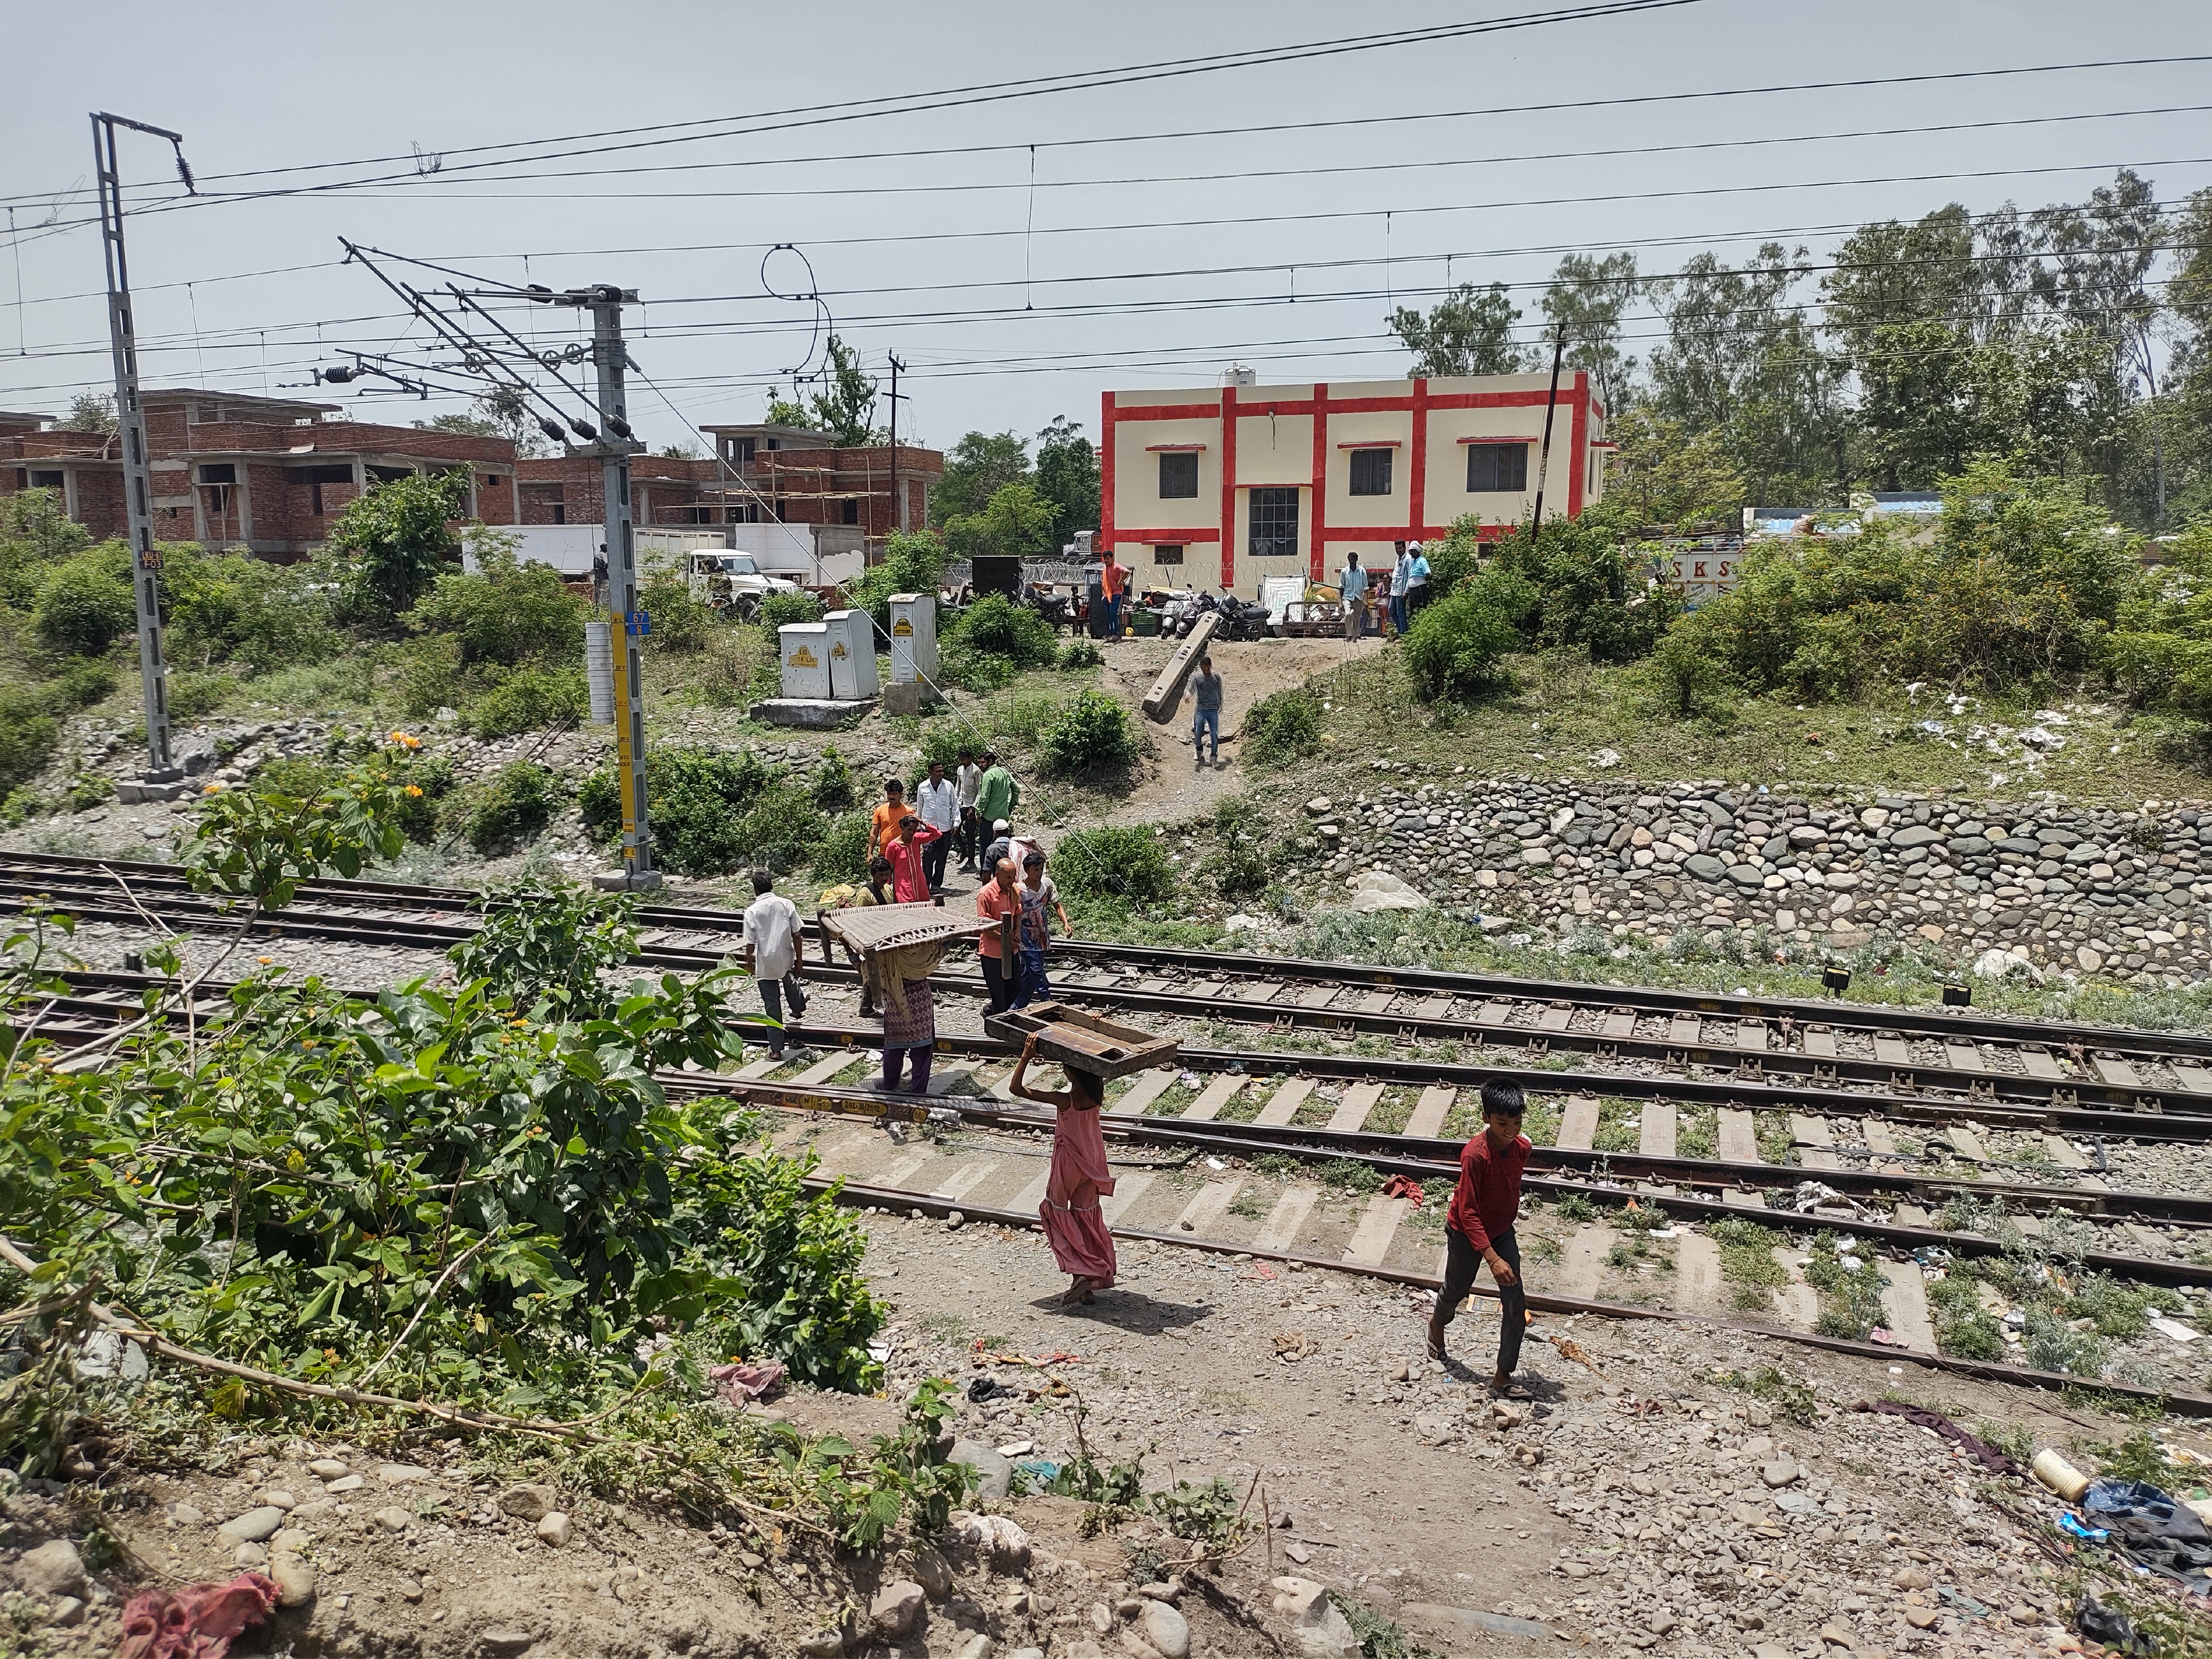 Railways orders yet another questionable demolition in Uttarakhand